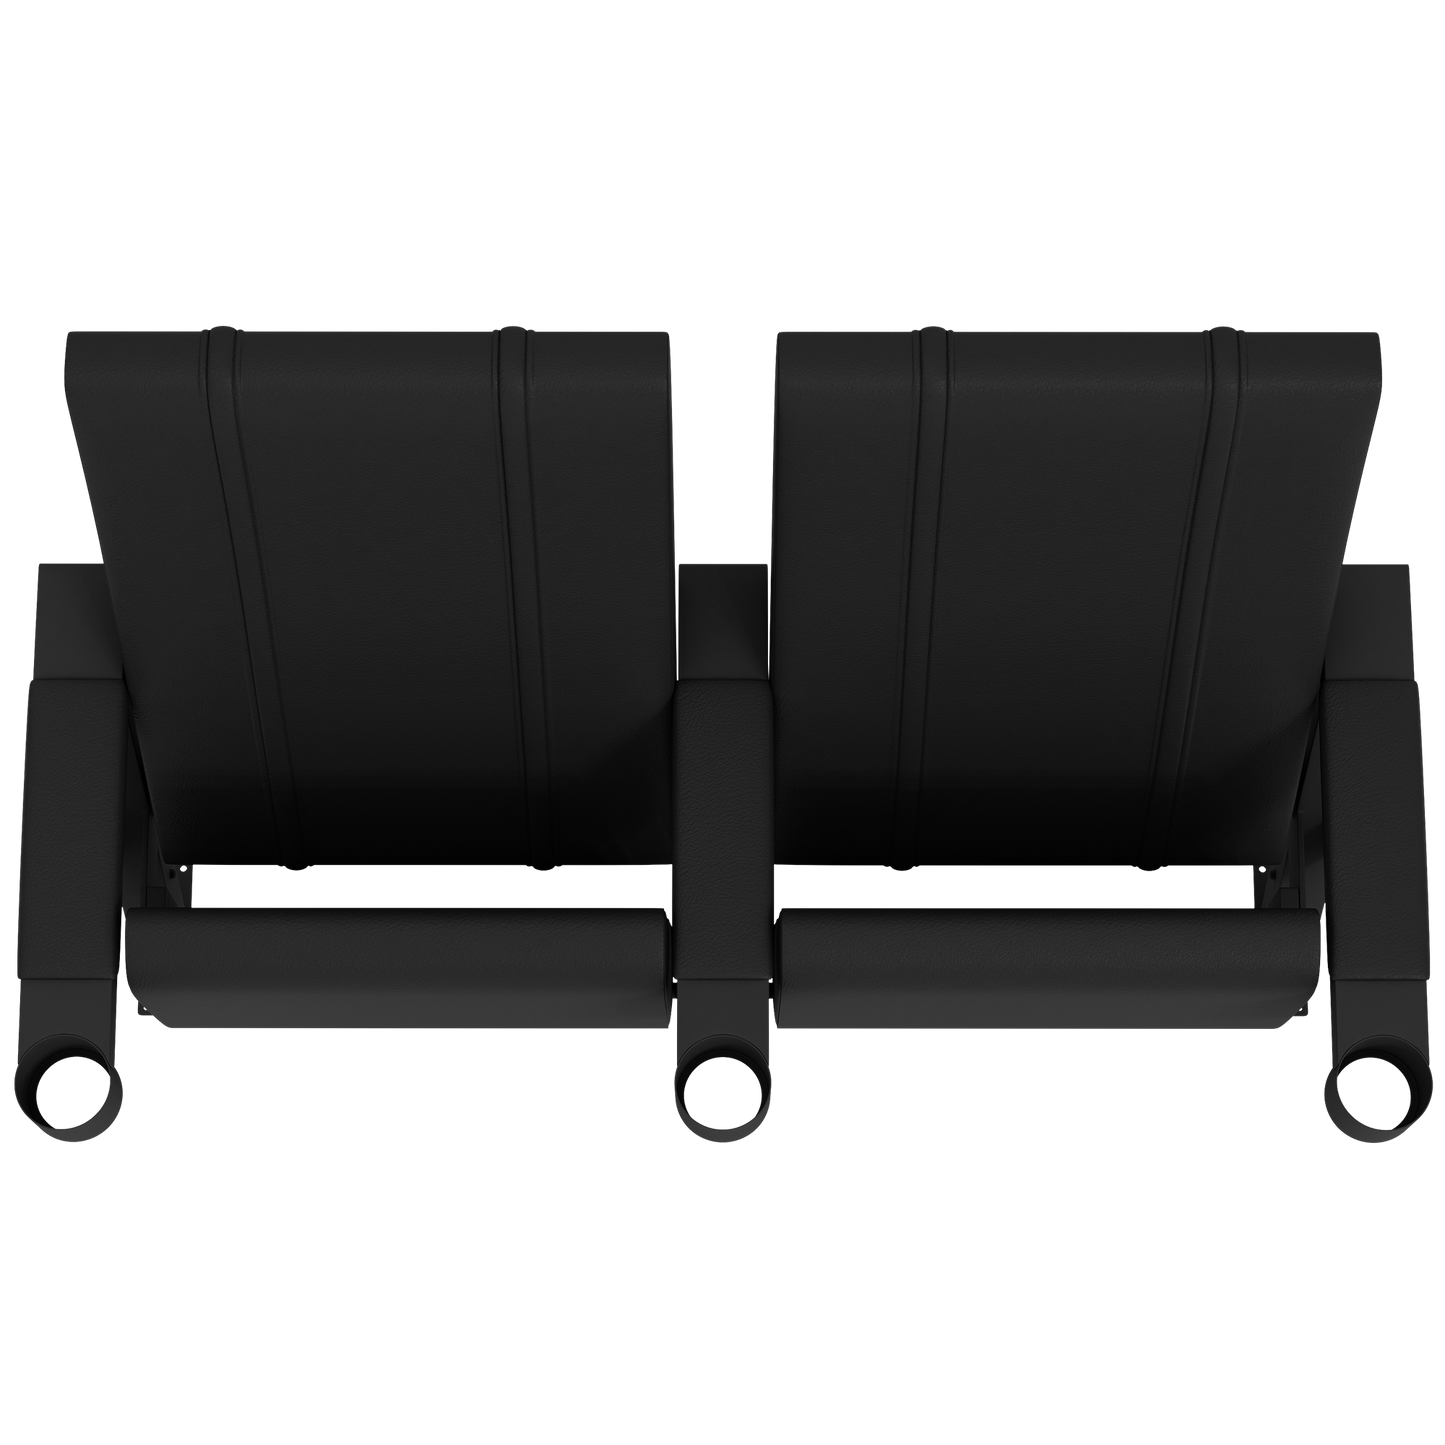 SuiteMax 3.5 VIP Seats with Inter Miami FC Alternate Logo